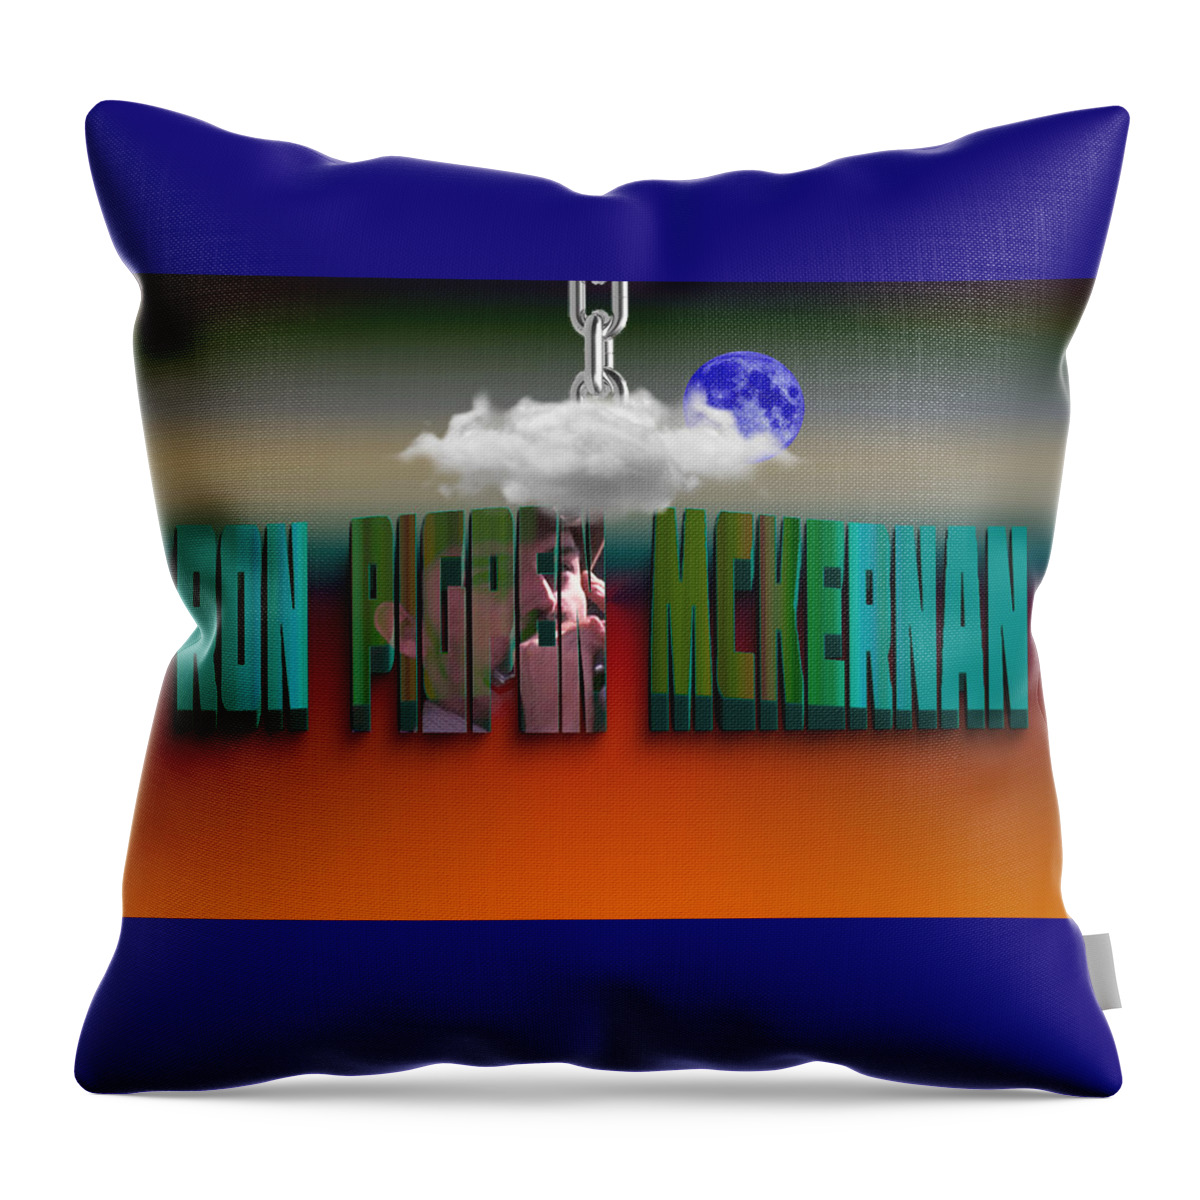 Ron Mckernan Throw Pillow featuring the mixed media Ron Mckernan by Marvin Blaine